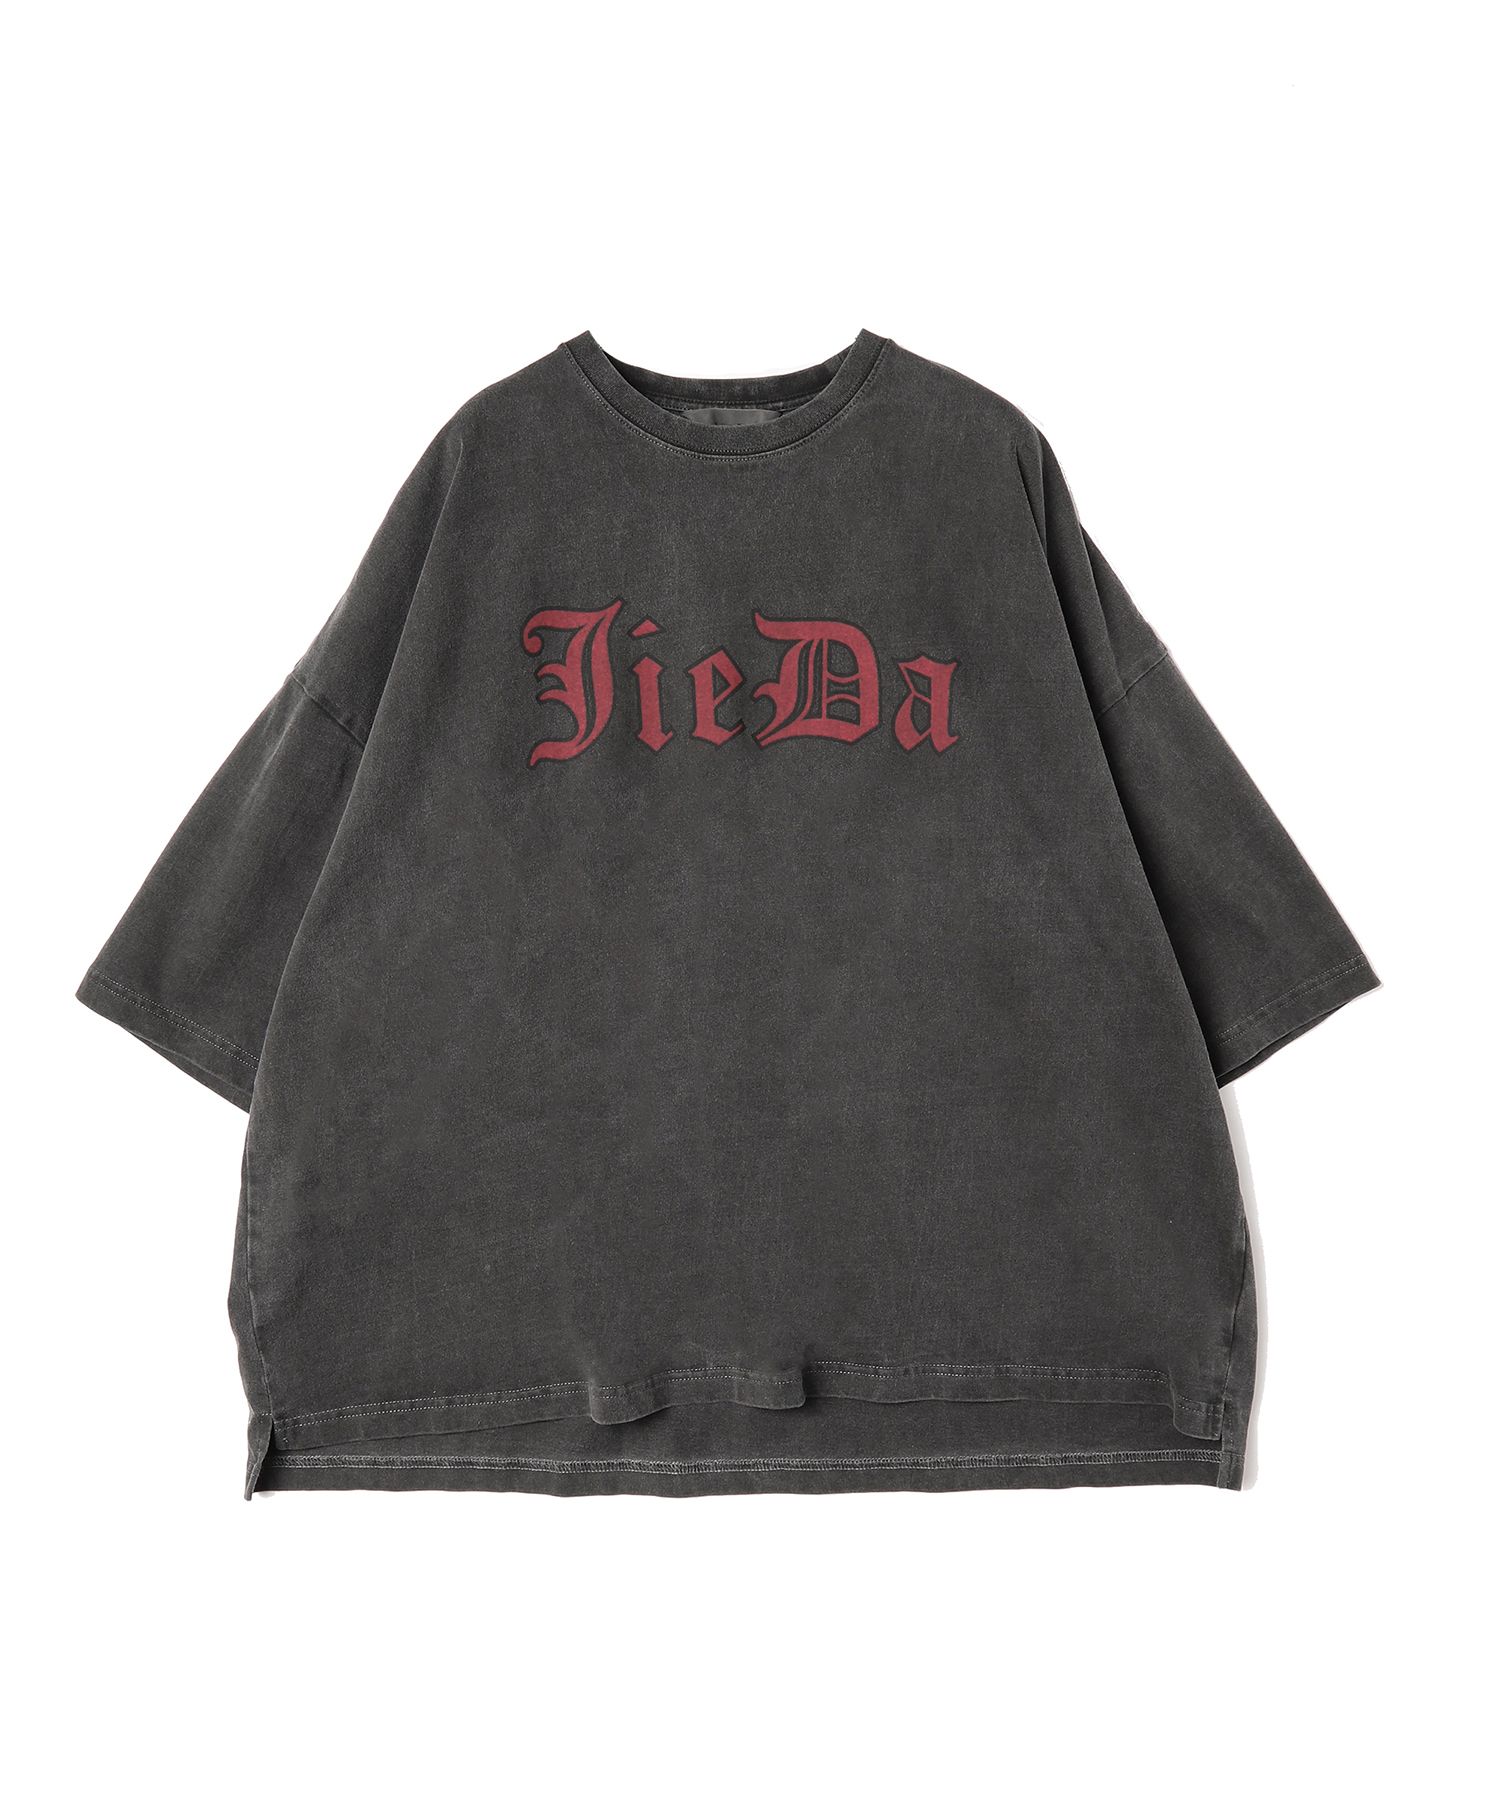 JieDa - JIEDA GOTHIC OVERSIZED TEE/オーバーサイズTシャツ/ブラック